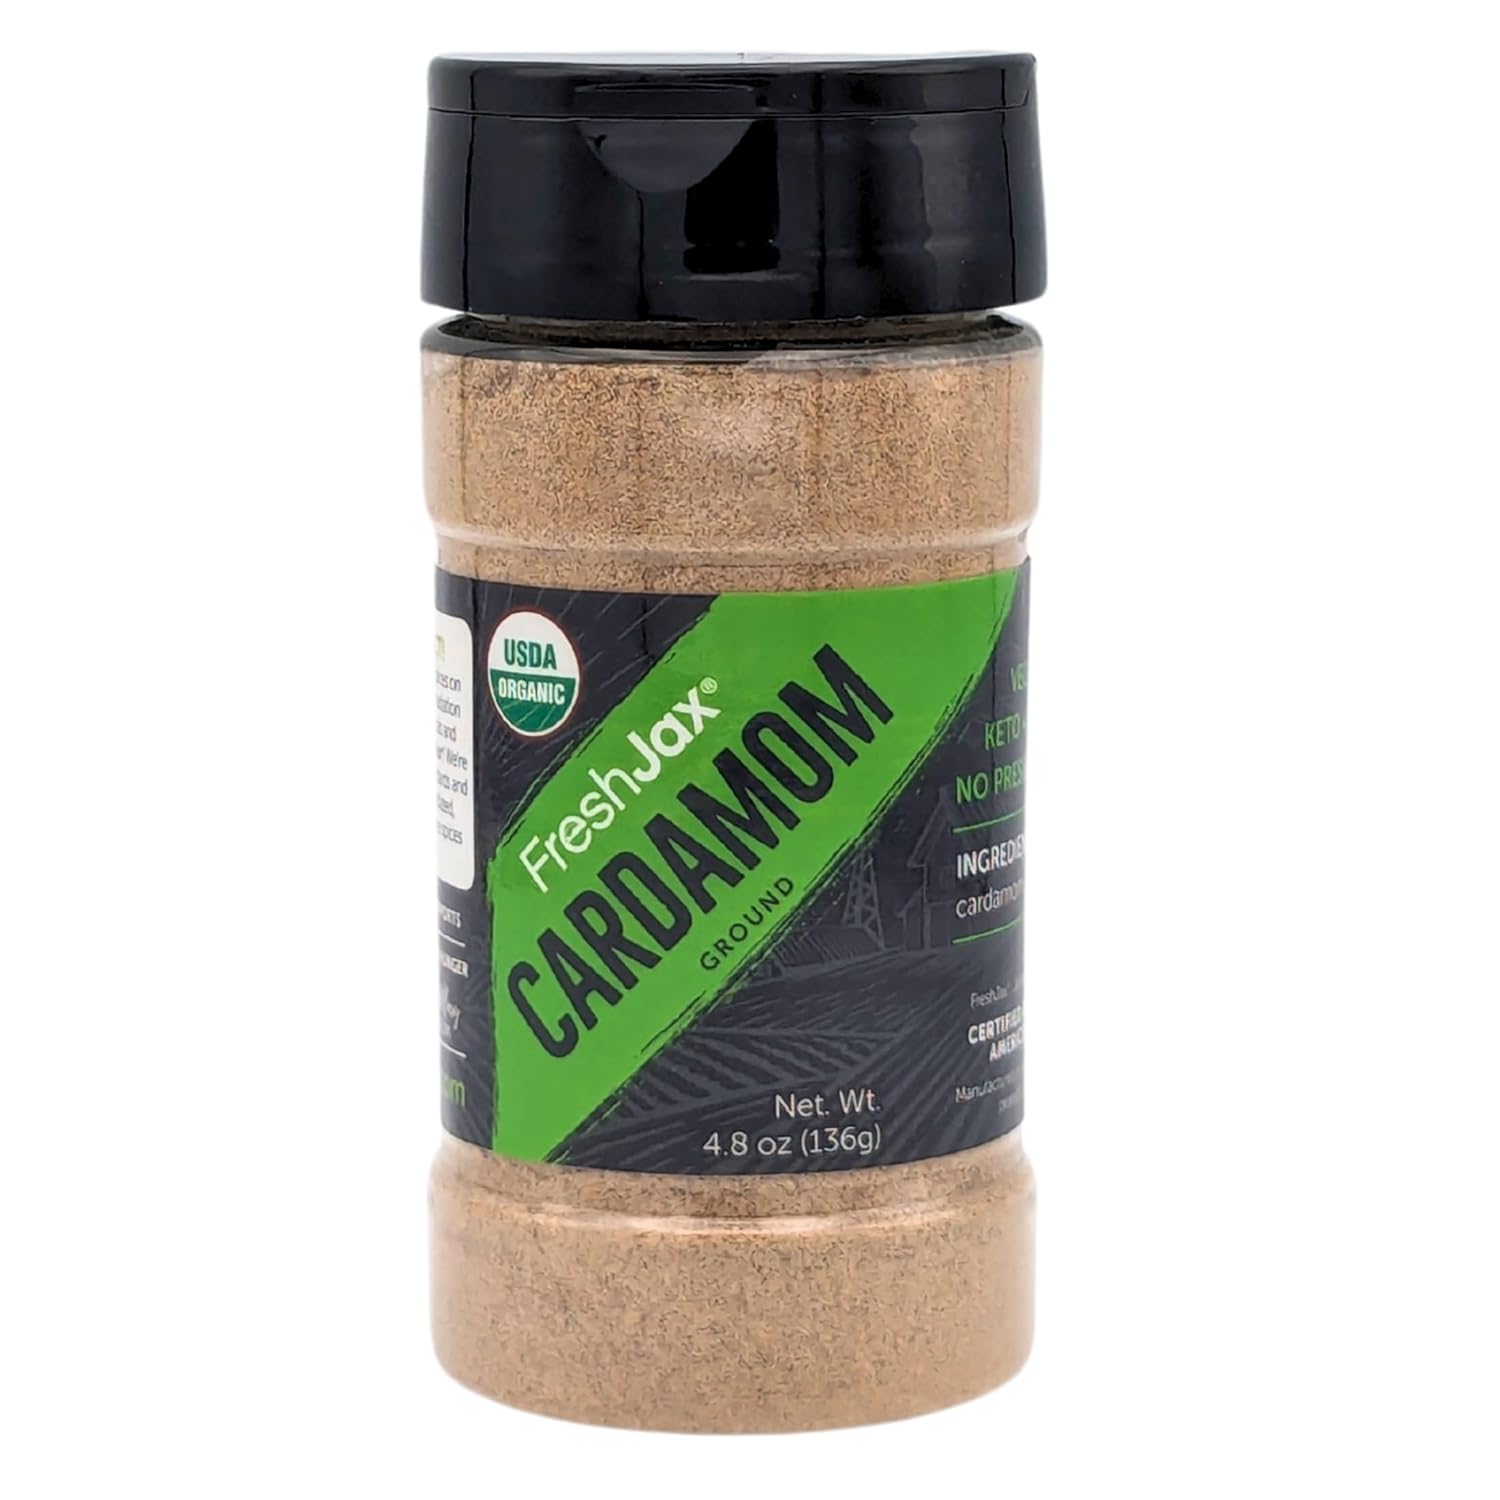 FreshJax Organic Ground Cardamom Spice (4.8 oz Bottle) Non GMO, Gluten Free, Keto, Paleo, No Preservatives Cardamom Powder | Handcrafted in Jacksonville, Florida